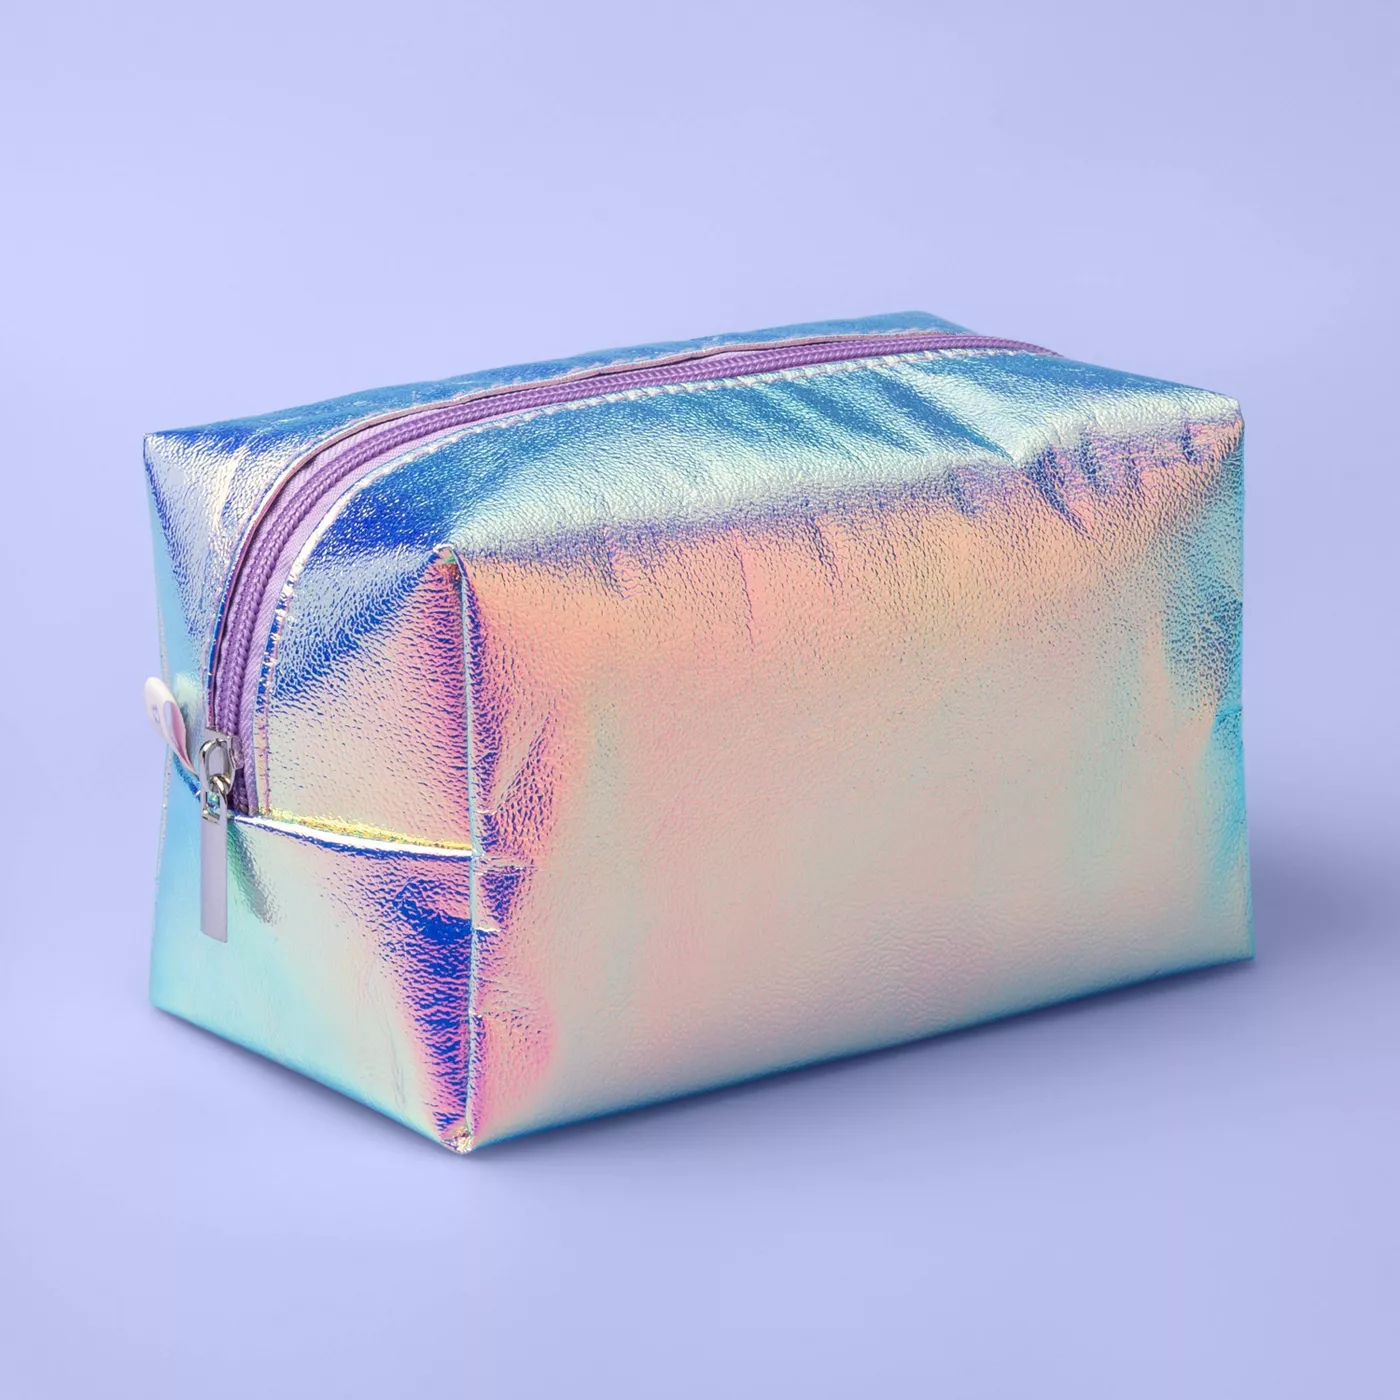 Holographic Loaf Makeup Bag - More Than Magic™ - image 1 of 3